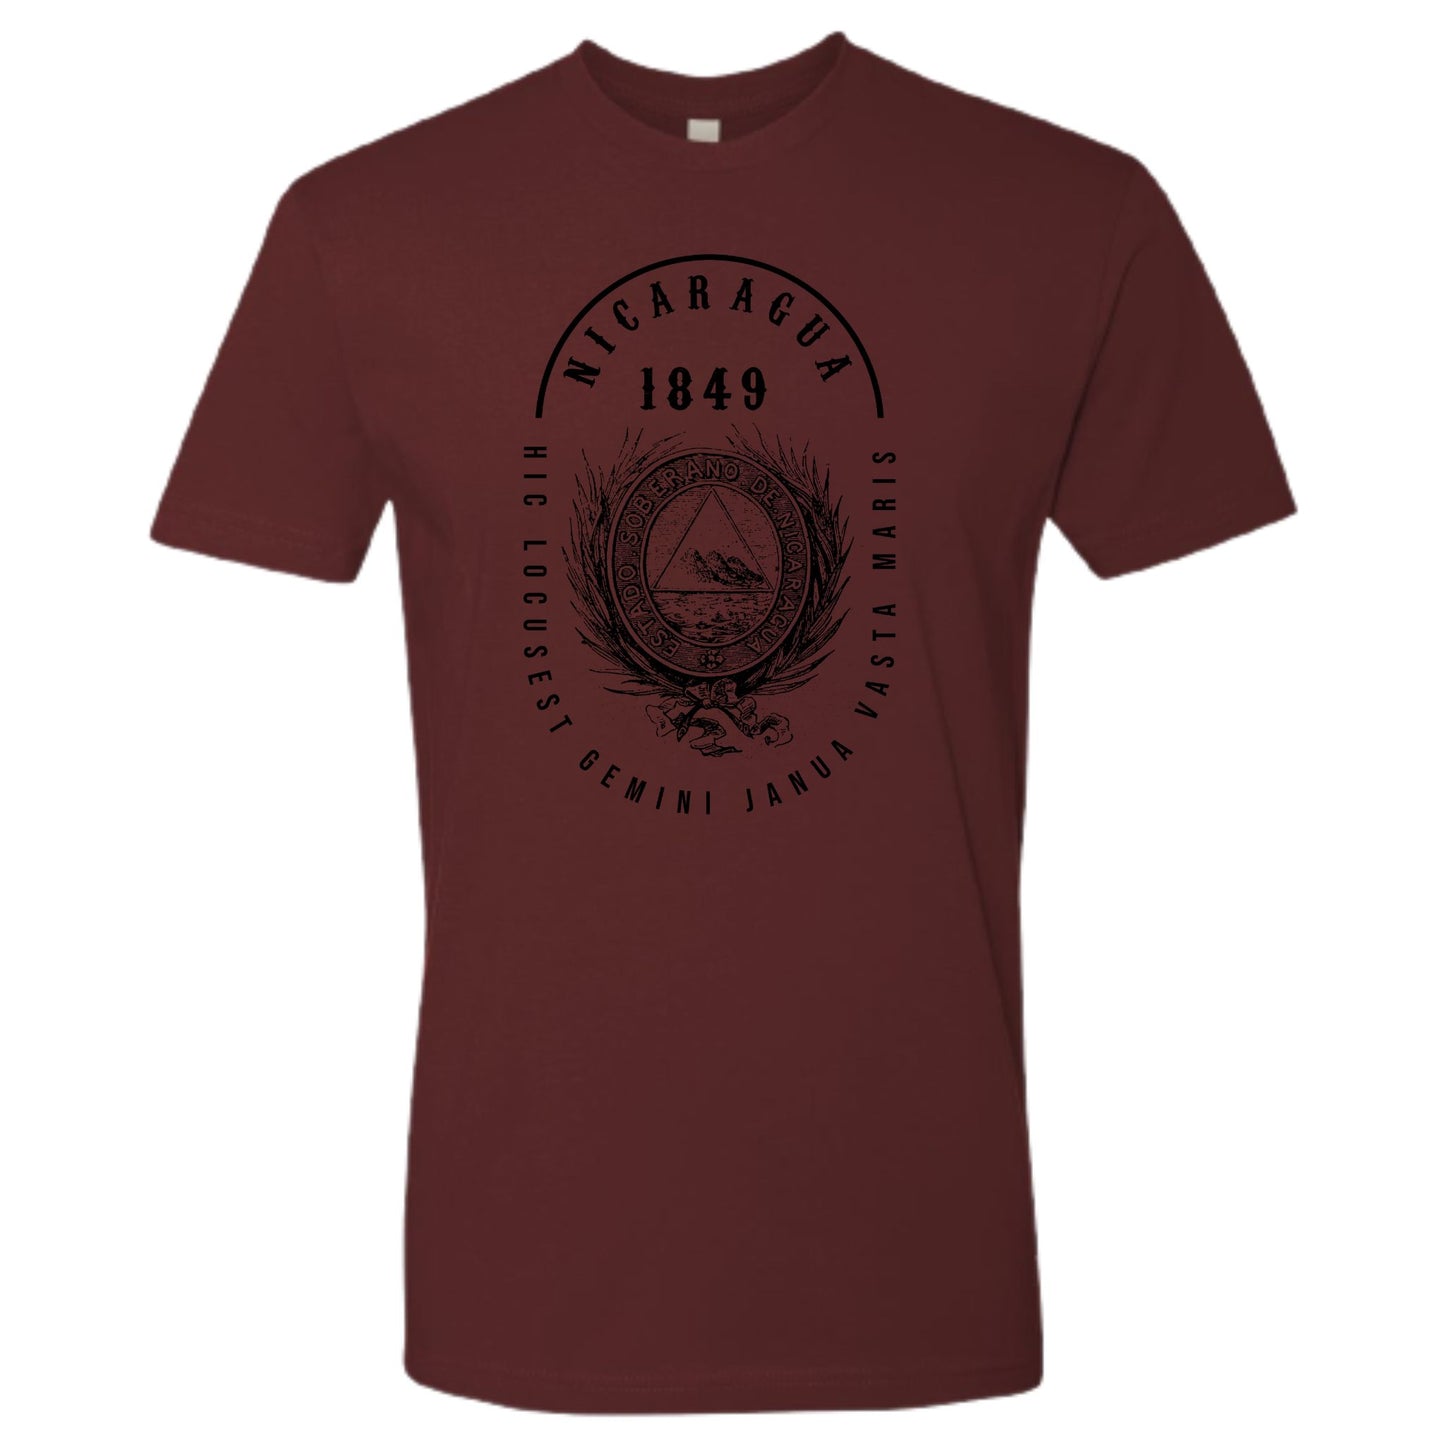 Nicaragua 1849 Simple T-shirt